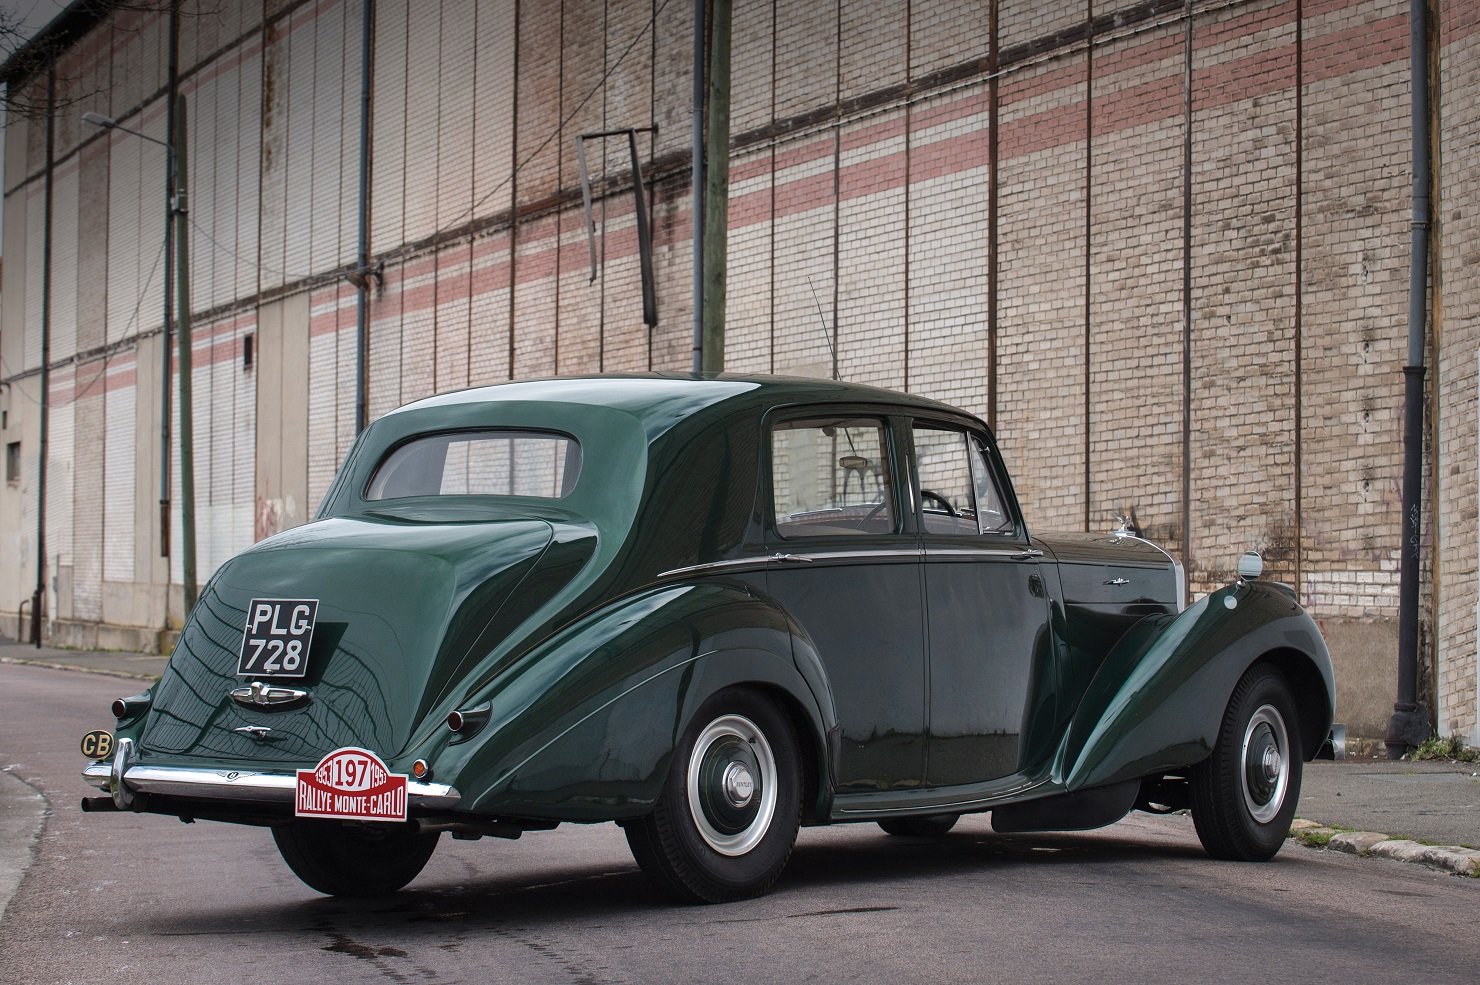 1957, Bentley, R type, Saloon, Rally, Monte carlo, Cars, Green, Classic Wallpaper